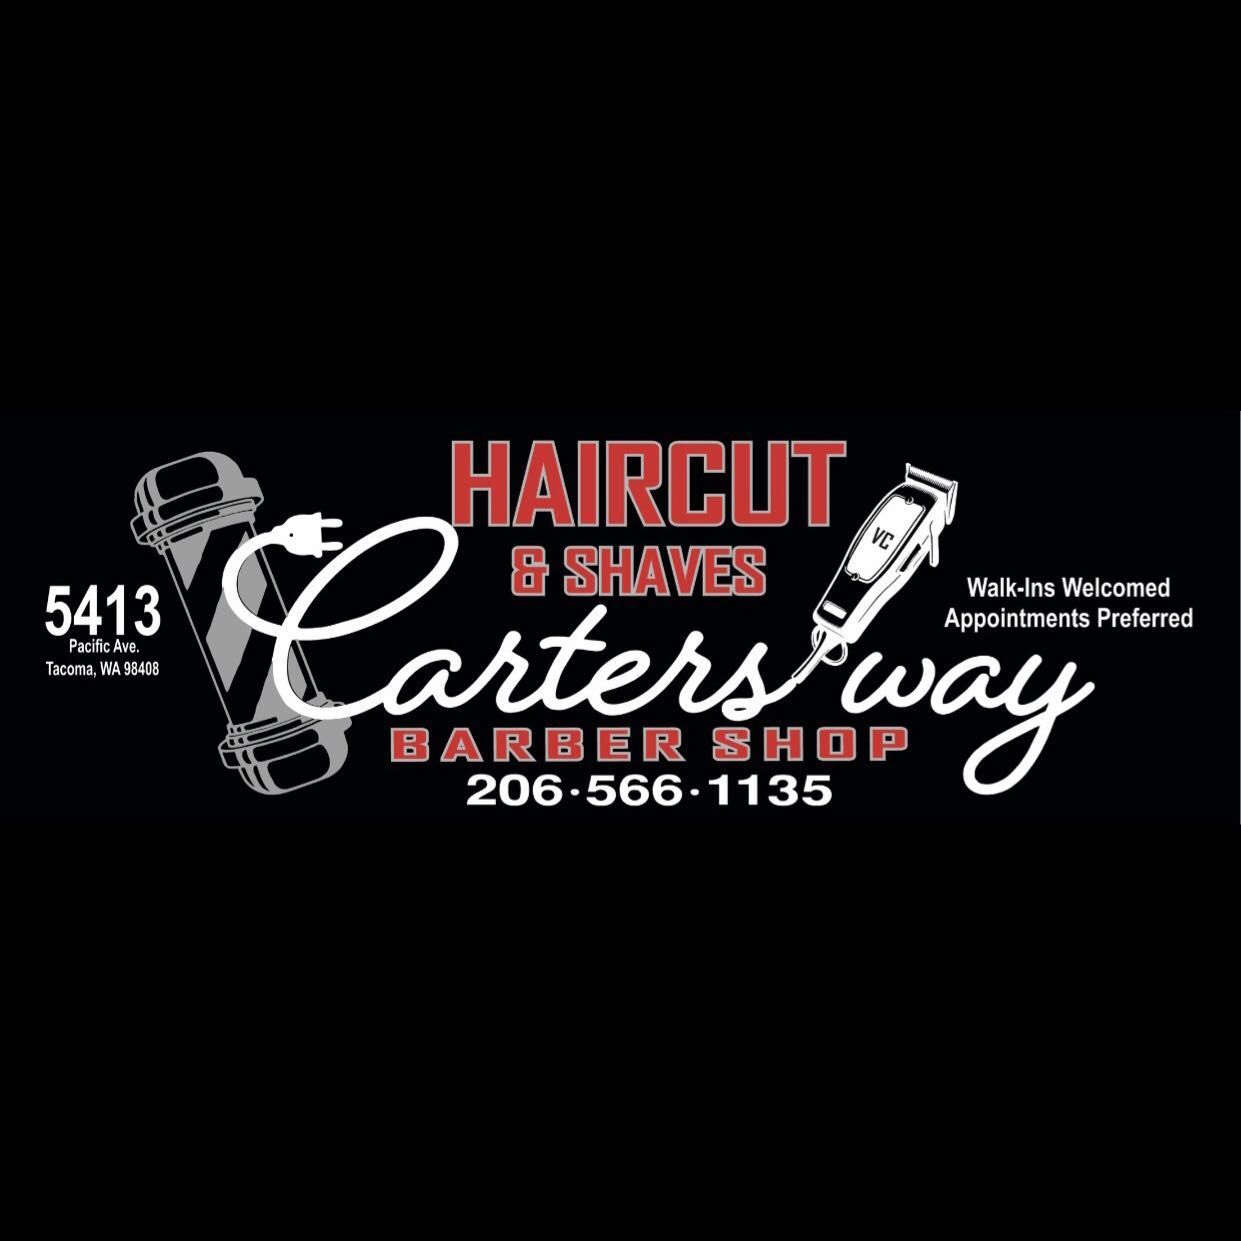 Carters Way Barbershop LLC, 5413 Pacific Ave, Tacoma, 98408